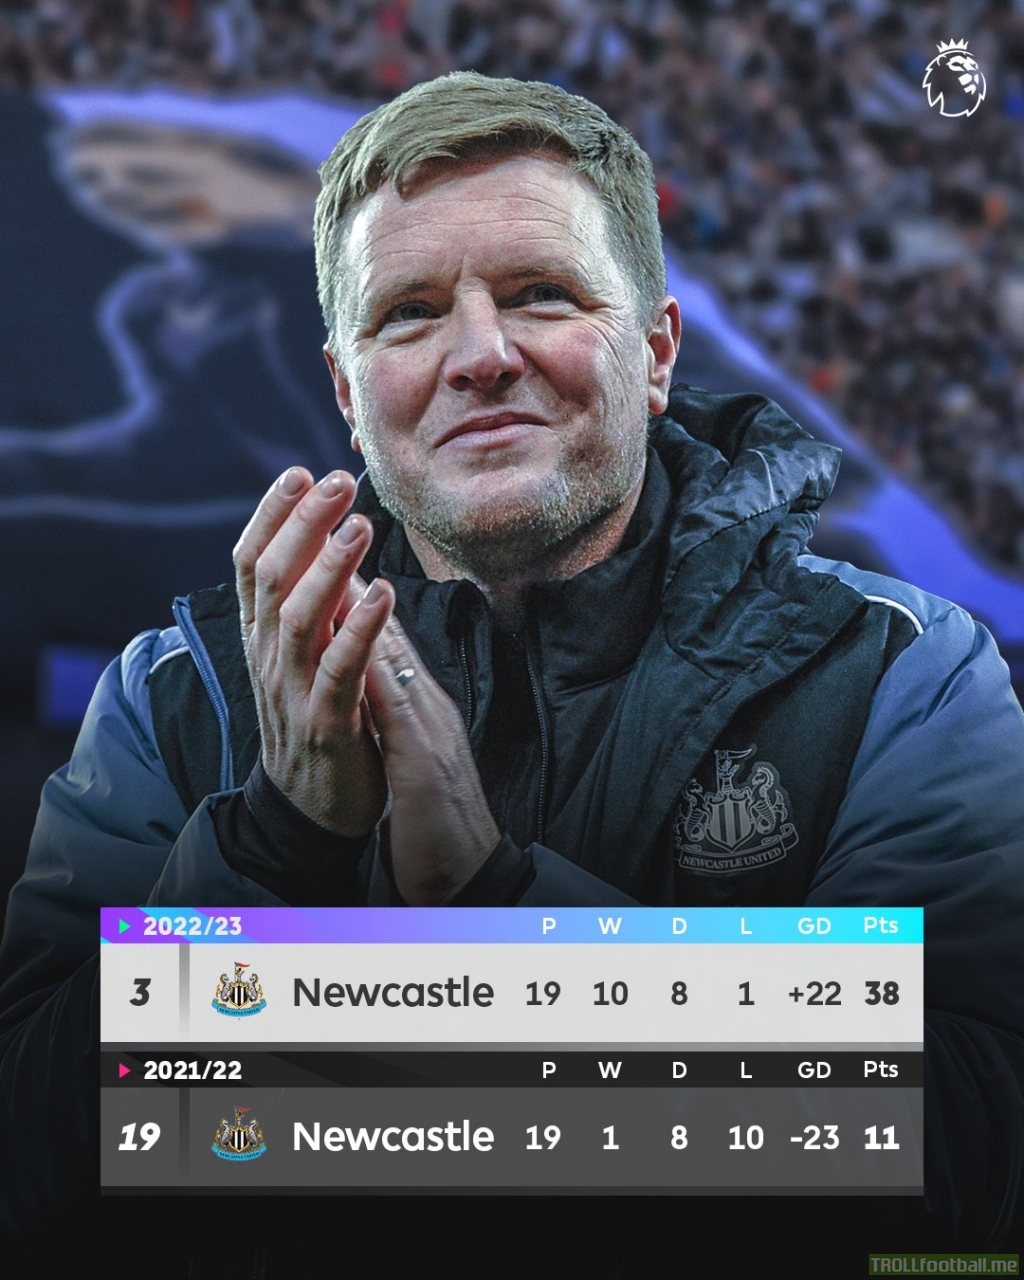 [@PremierLeague] Newcastle United's record halfway through the season last year vs this year.